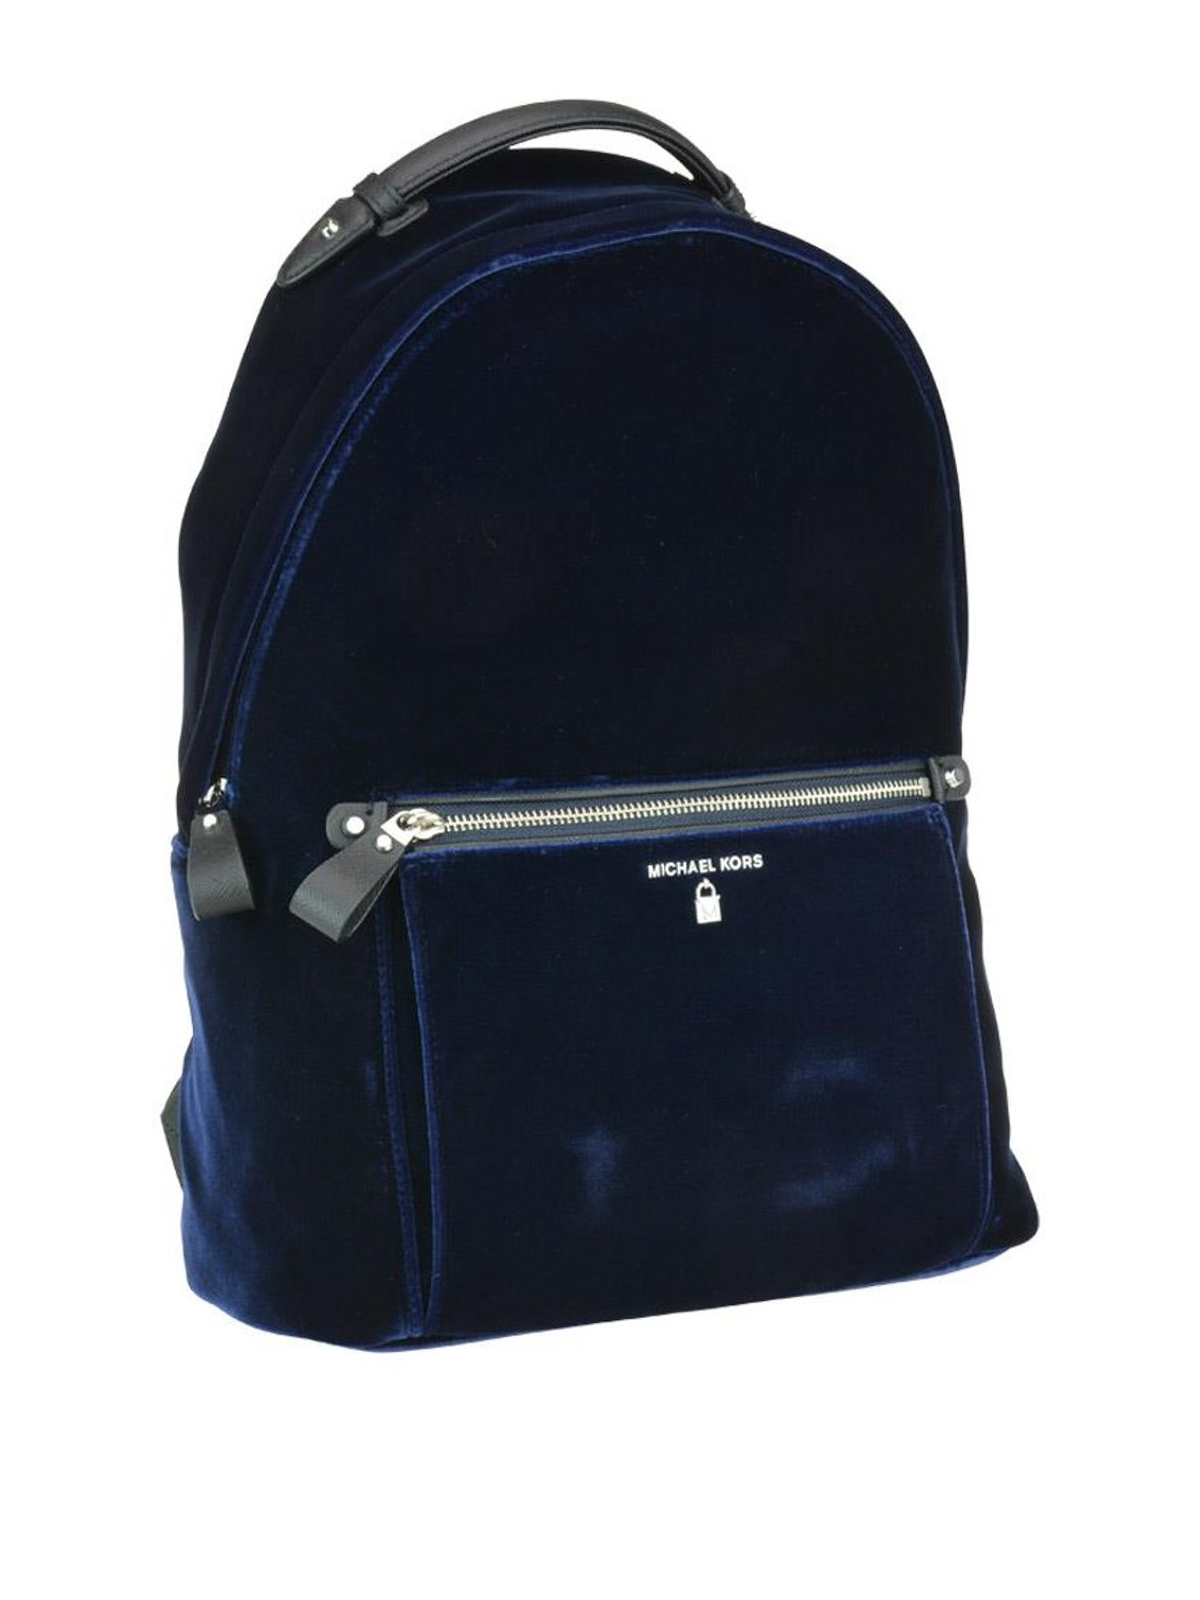 michael kors laptop bag blue